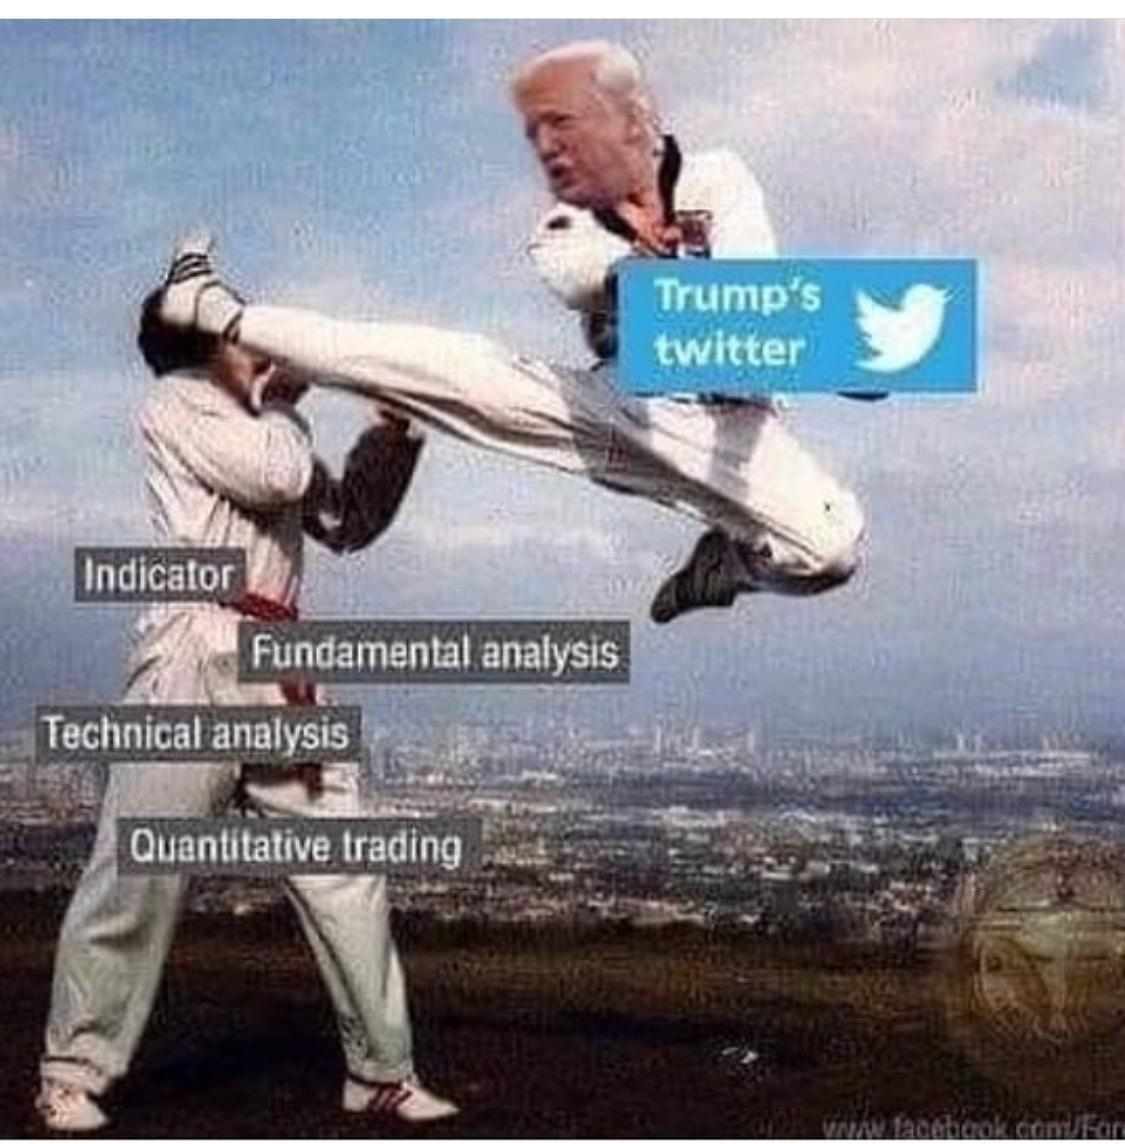 Kneel before Twitter. Trump's twitter meme.